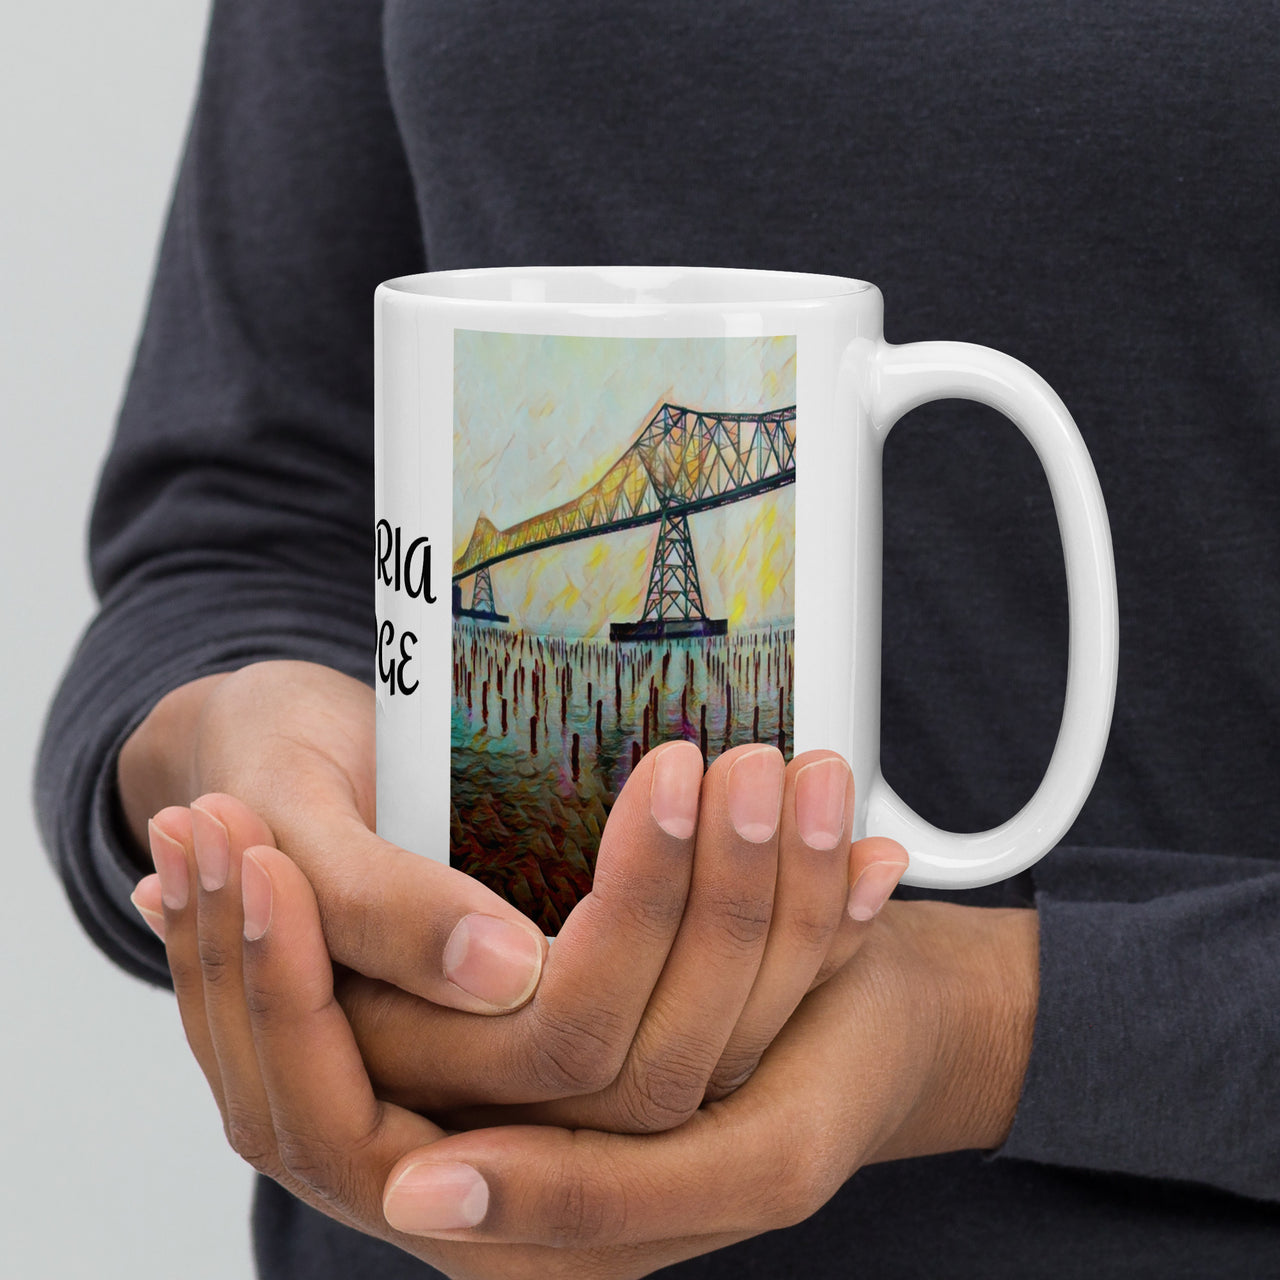 Astoria Bridge - White glossy mug